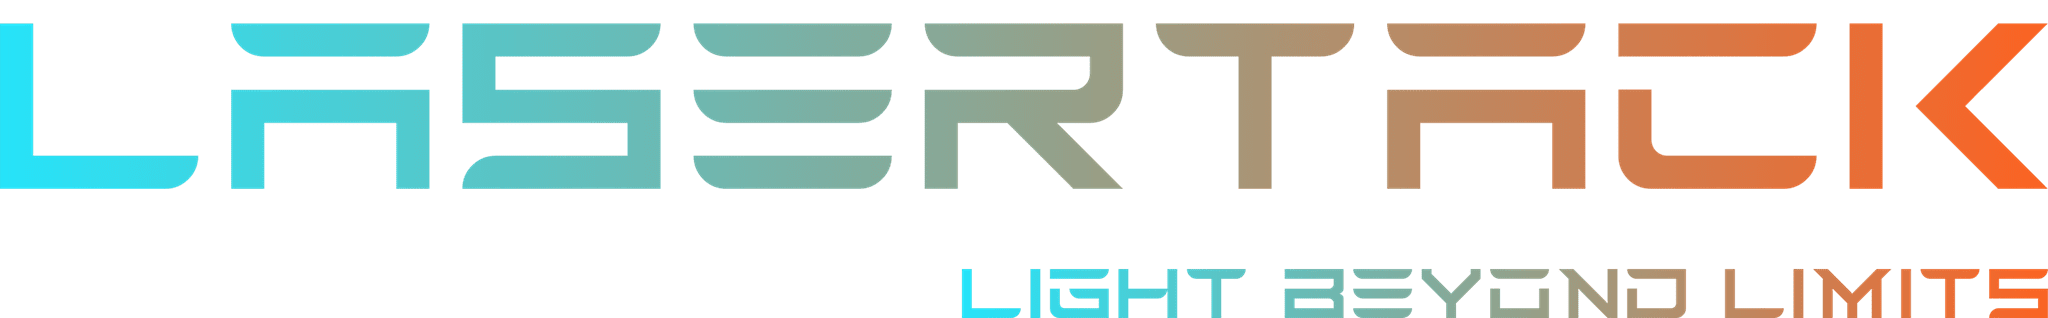 Lasertack GmbH